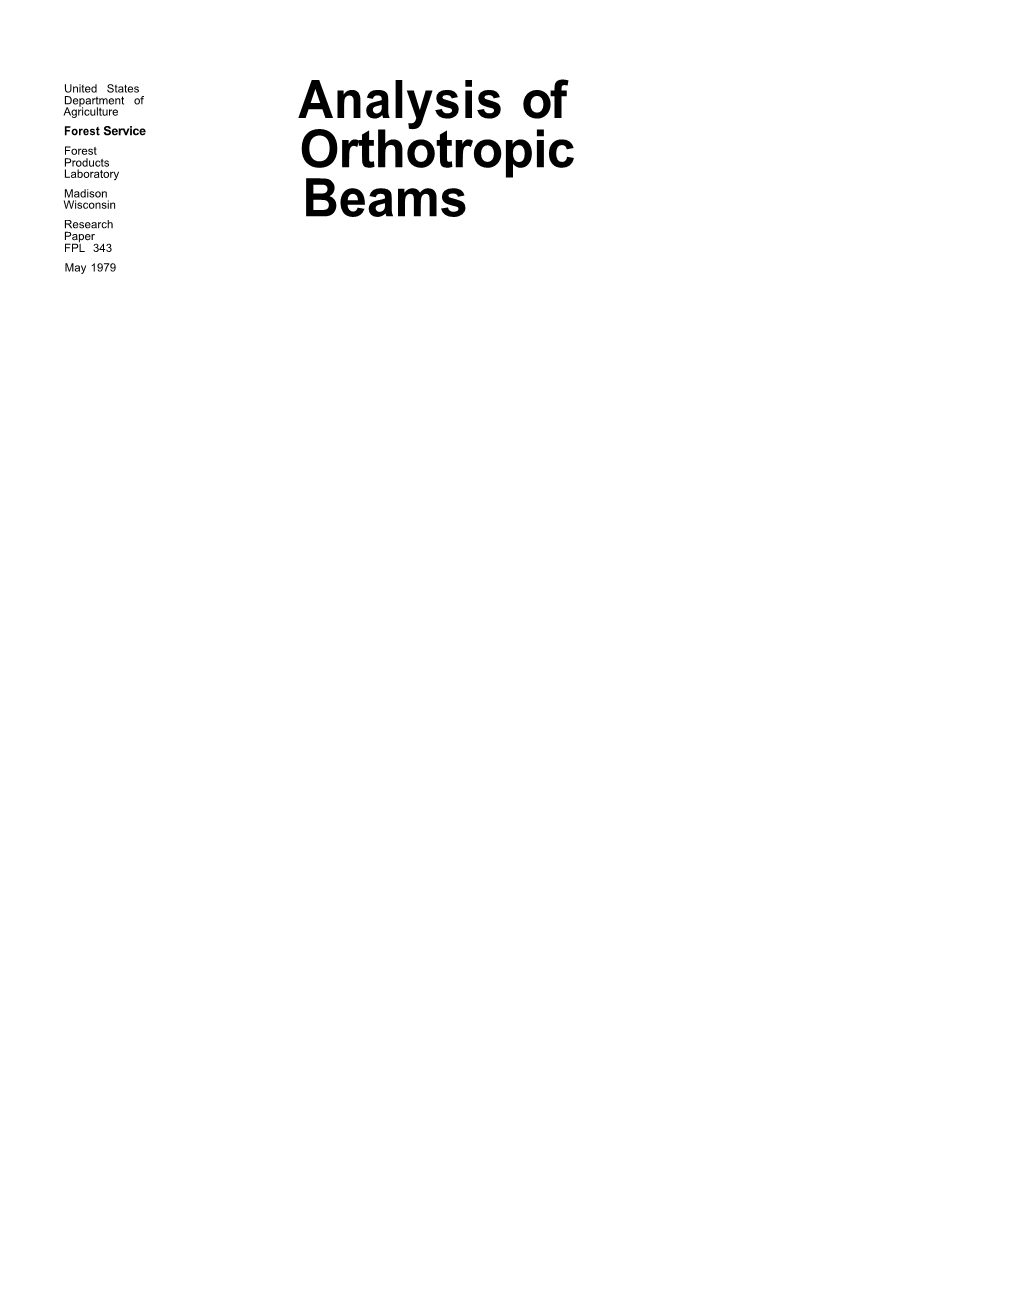 Analysis of Orthotropic Beams